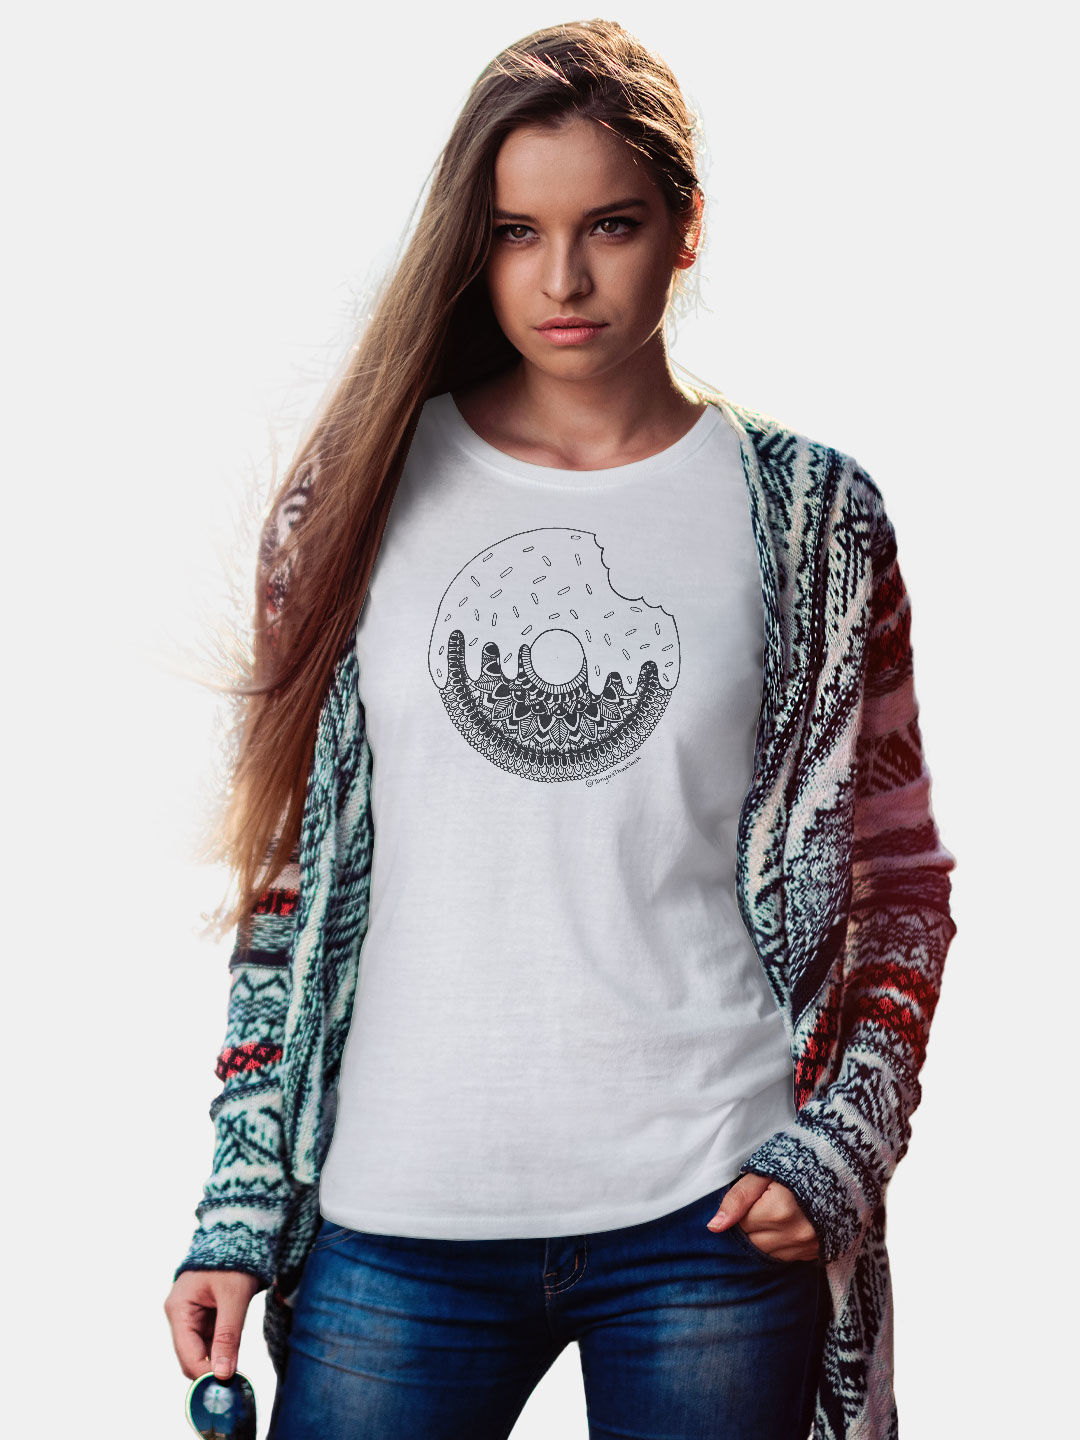 Buy Donut White - Female Designer T-Shirts T-Shirts Online